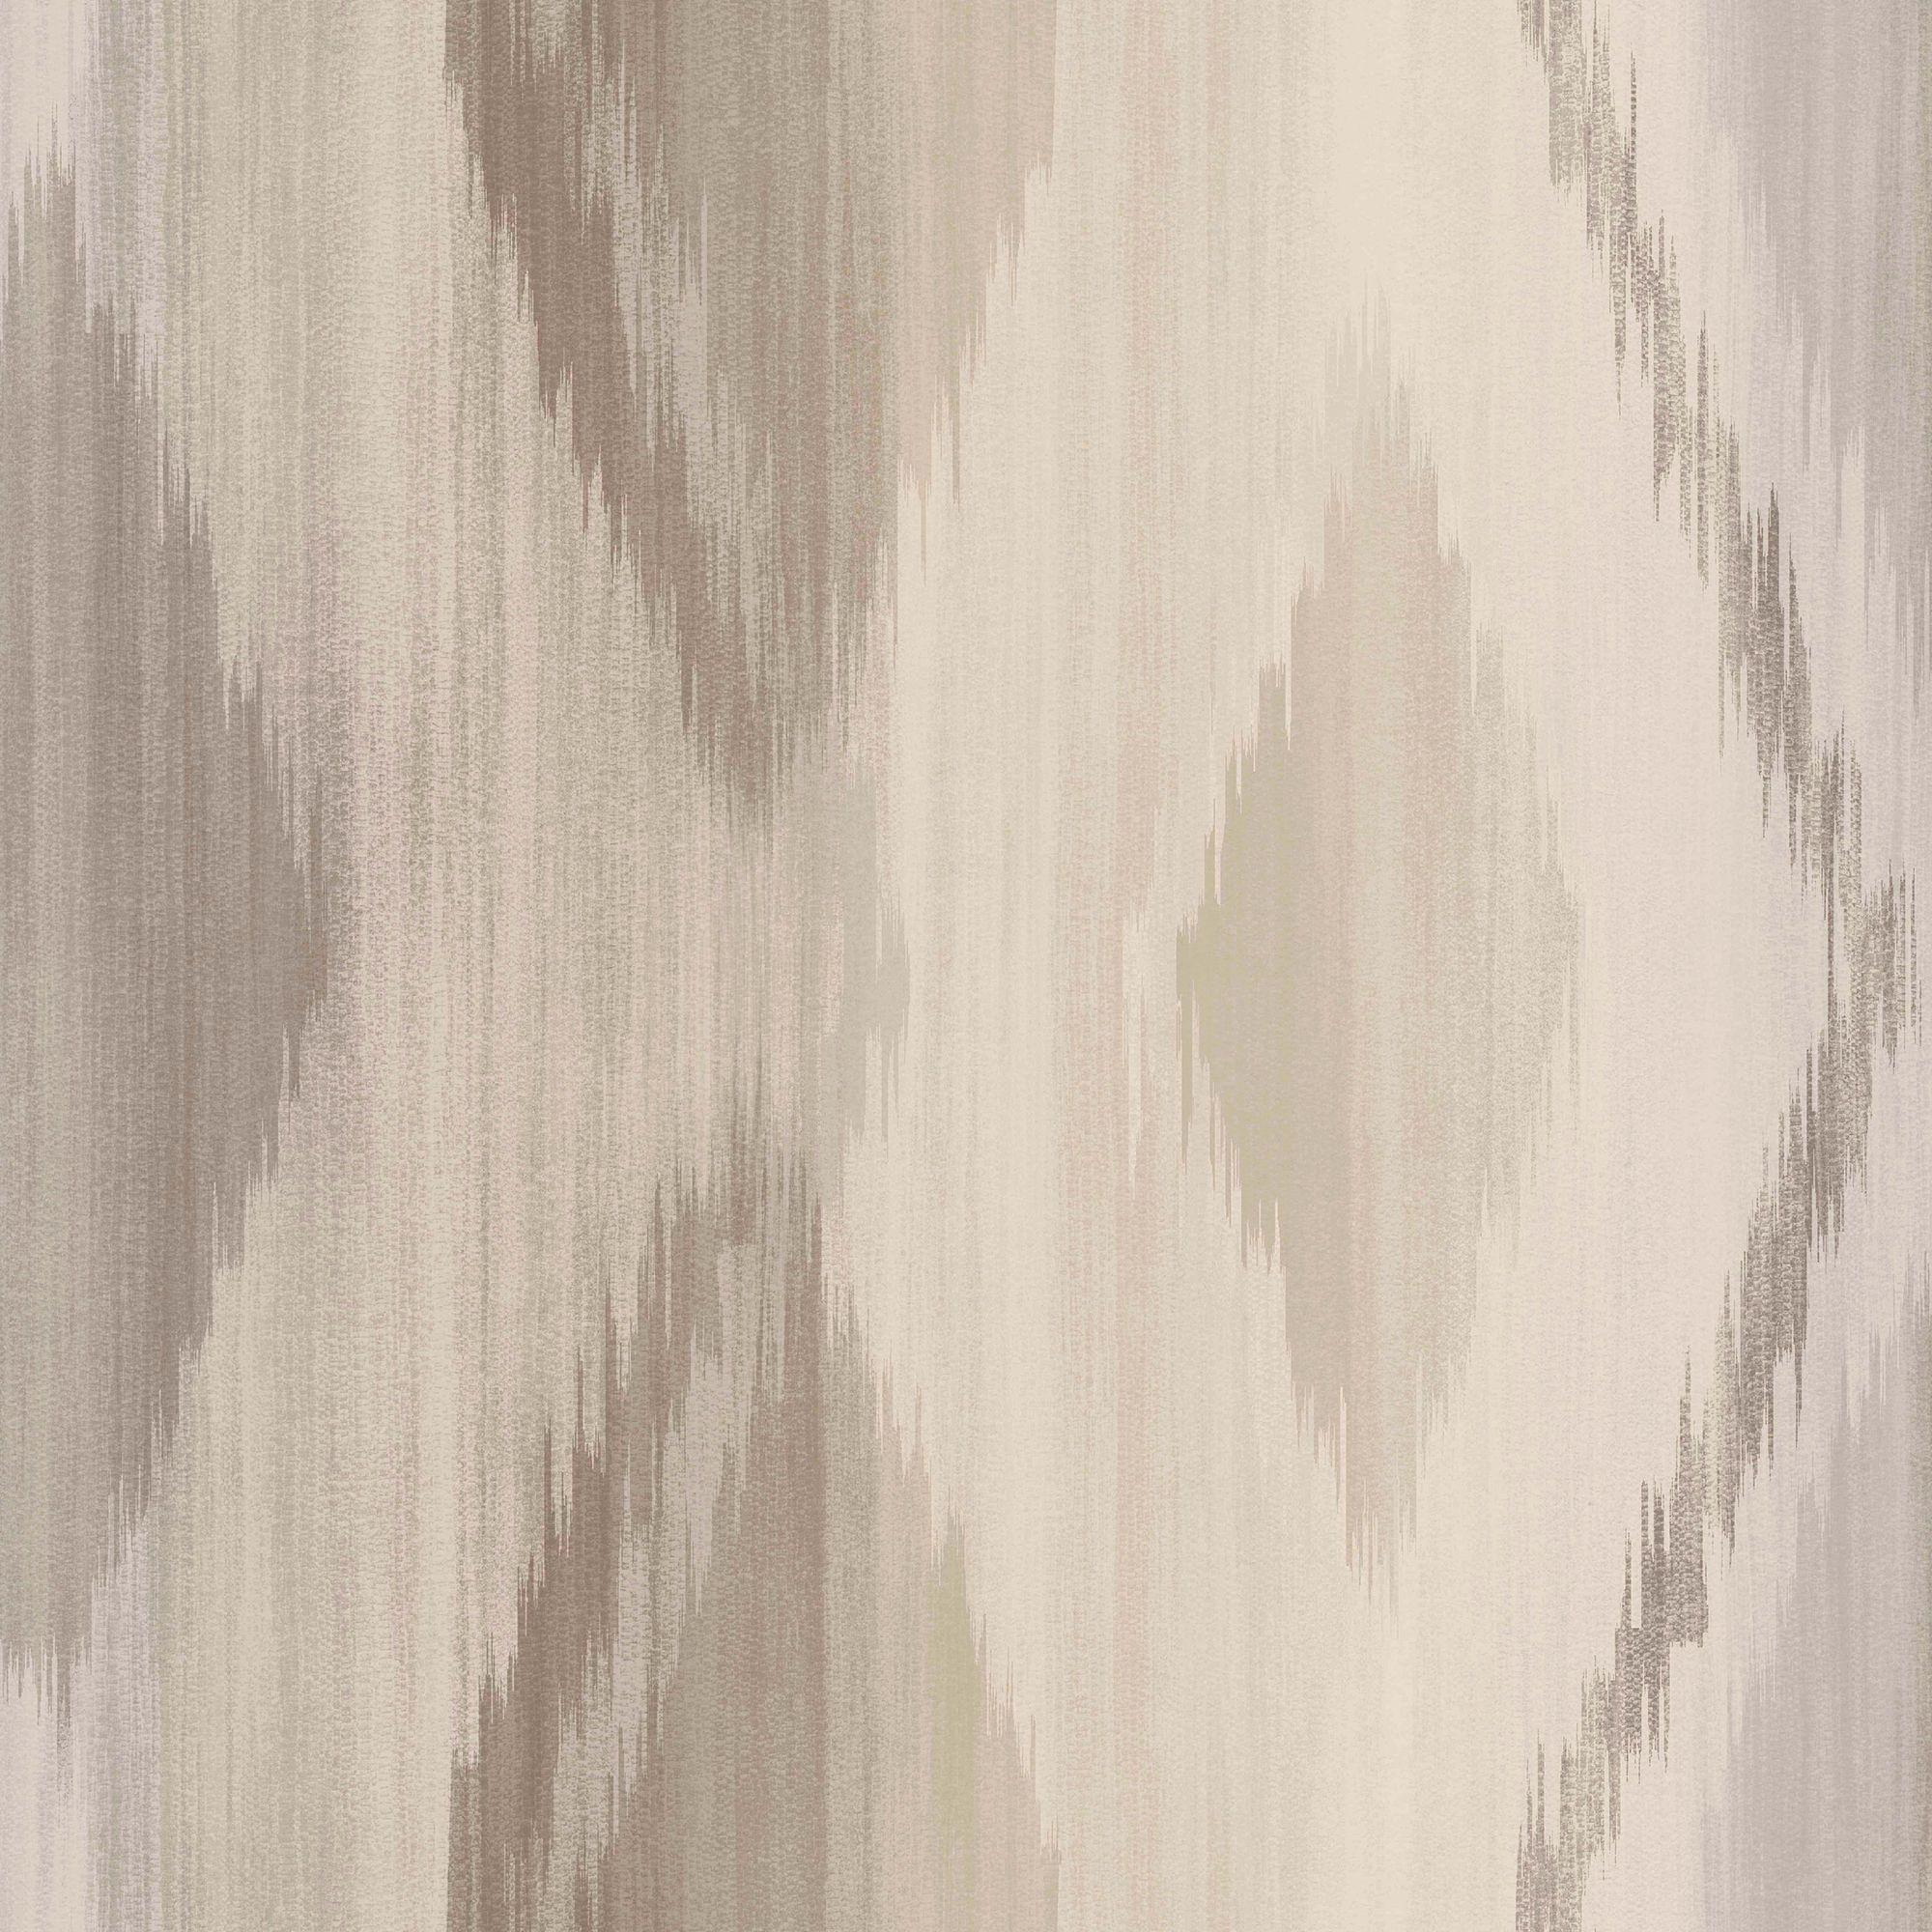 Next Abstract ikat Neutral Smooth Wallpaper Sample